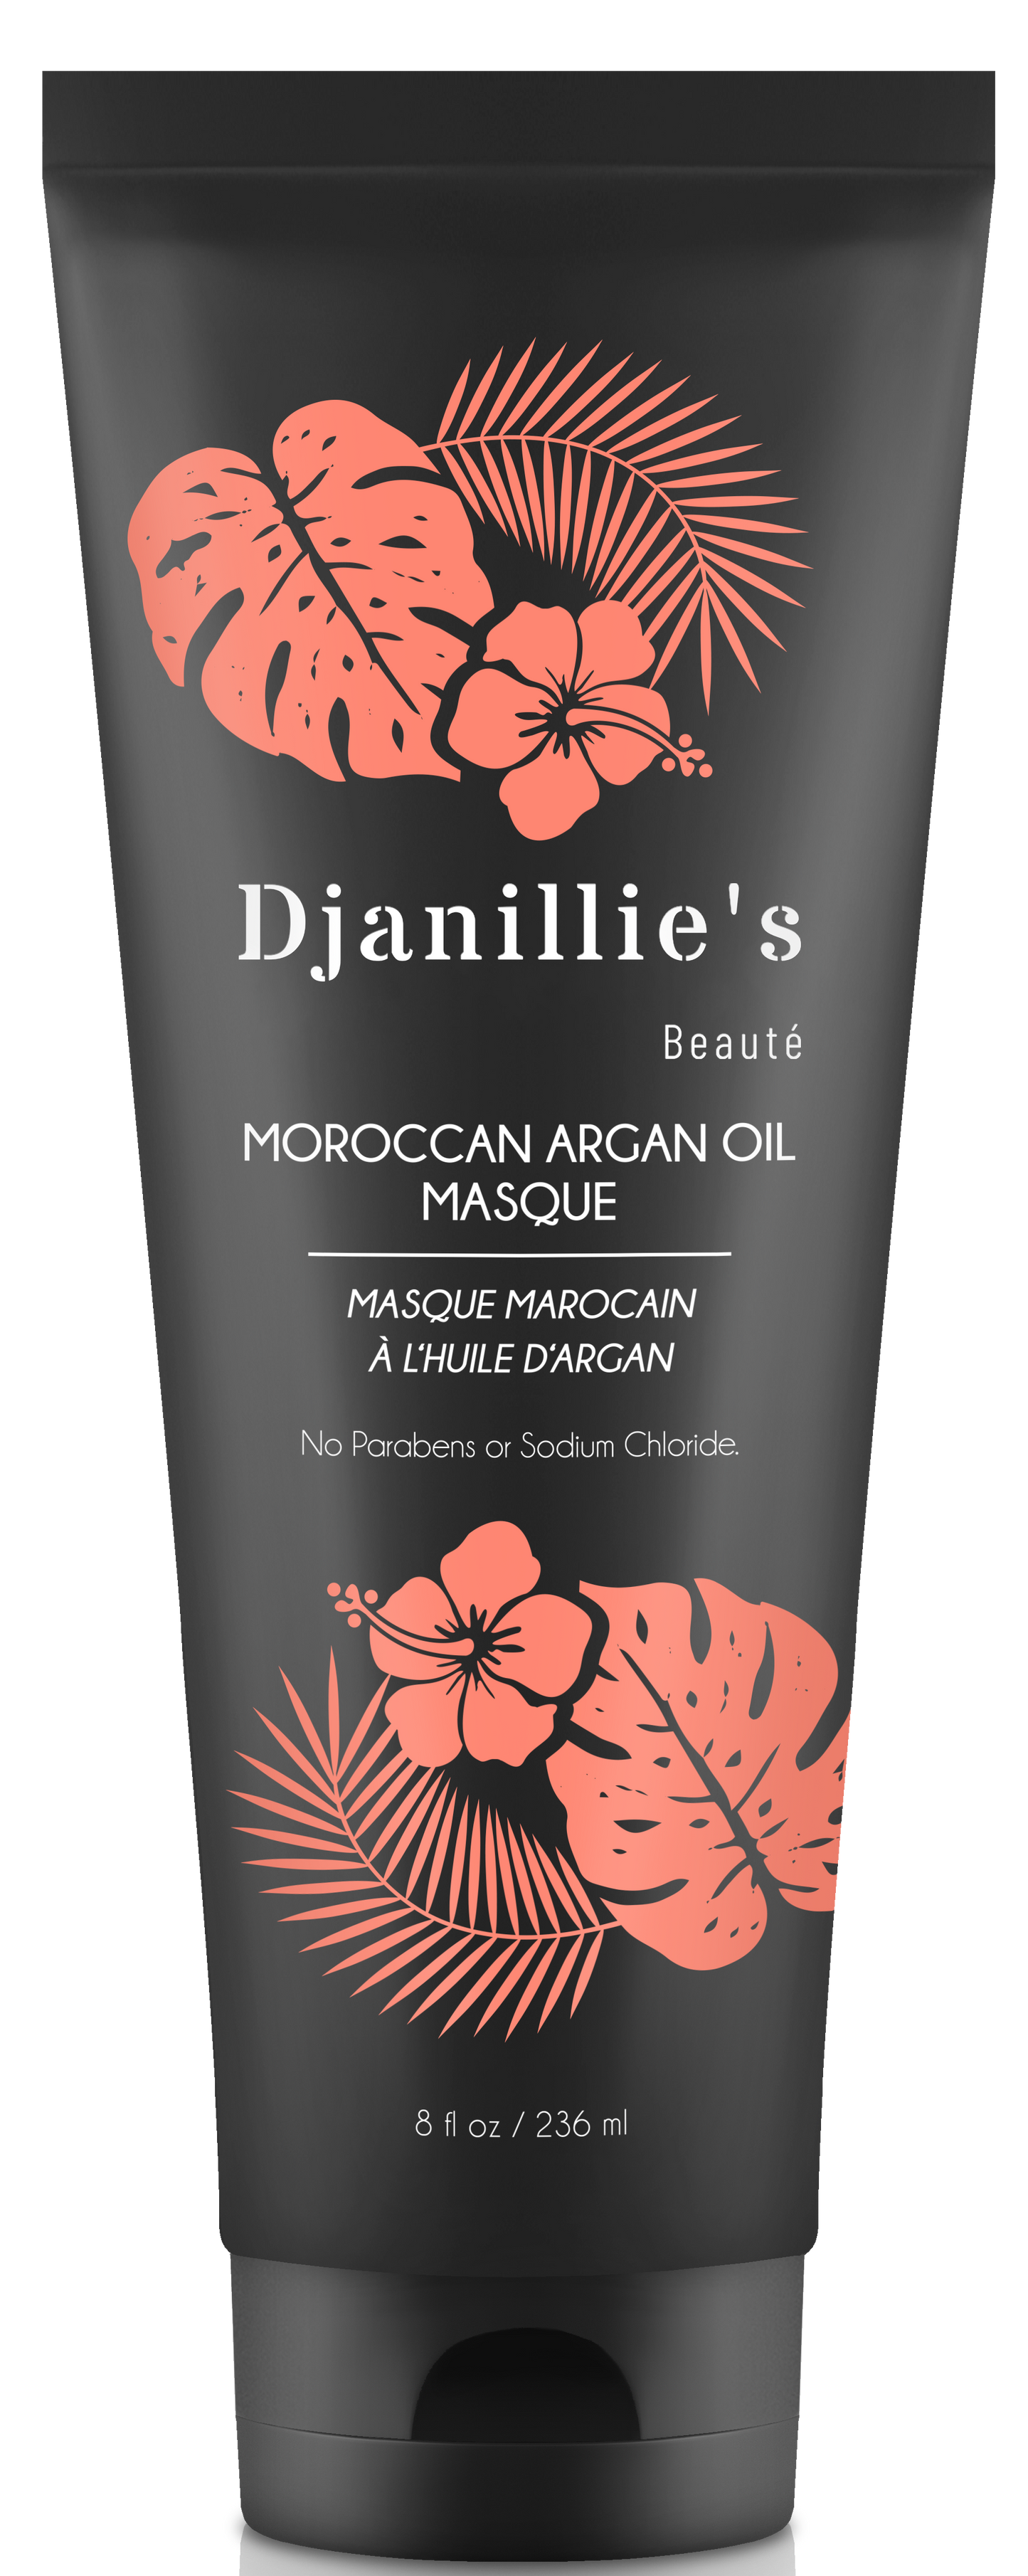 Moroccan Argan Oil Masque - Djanillie's Beauté